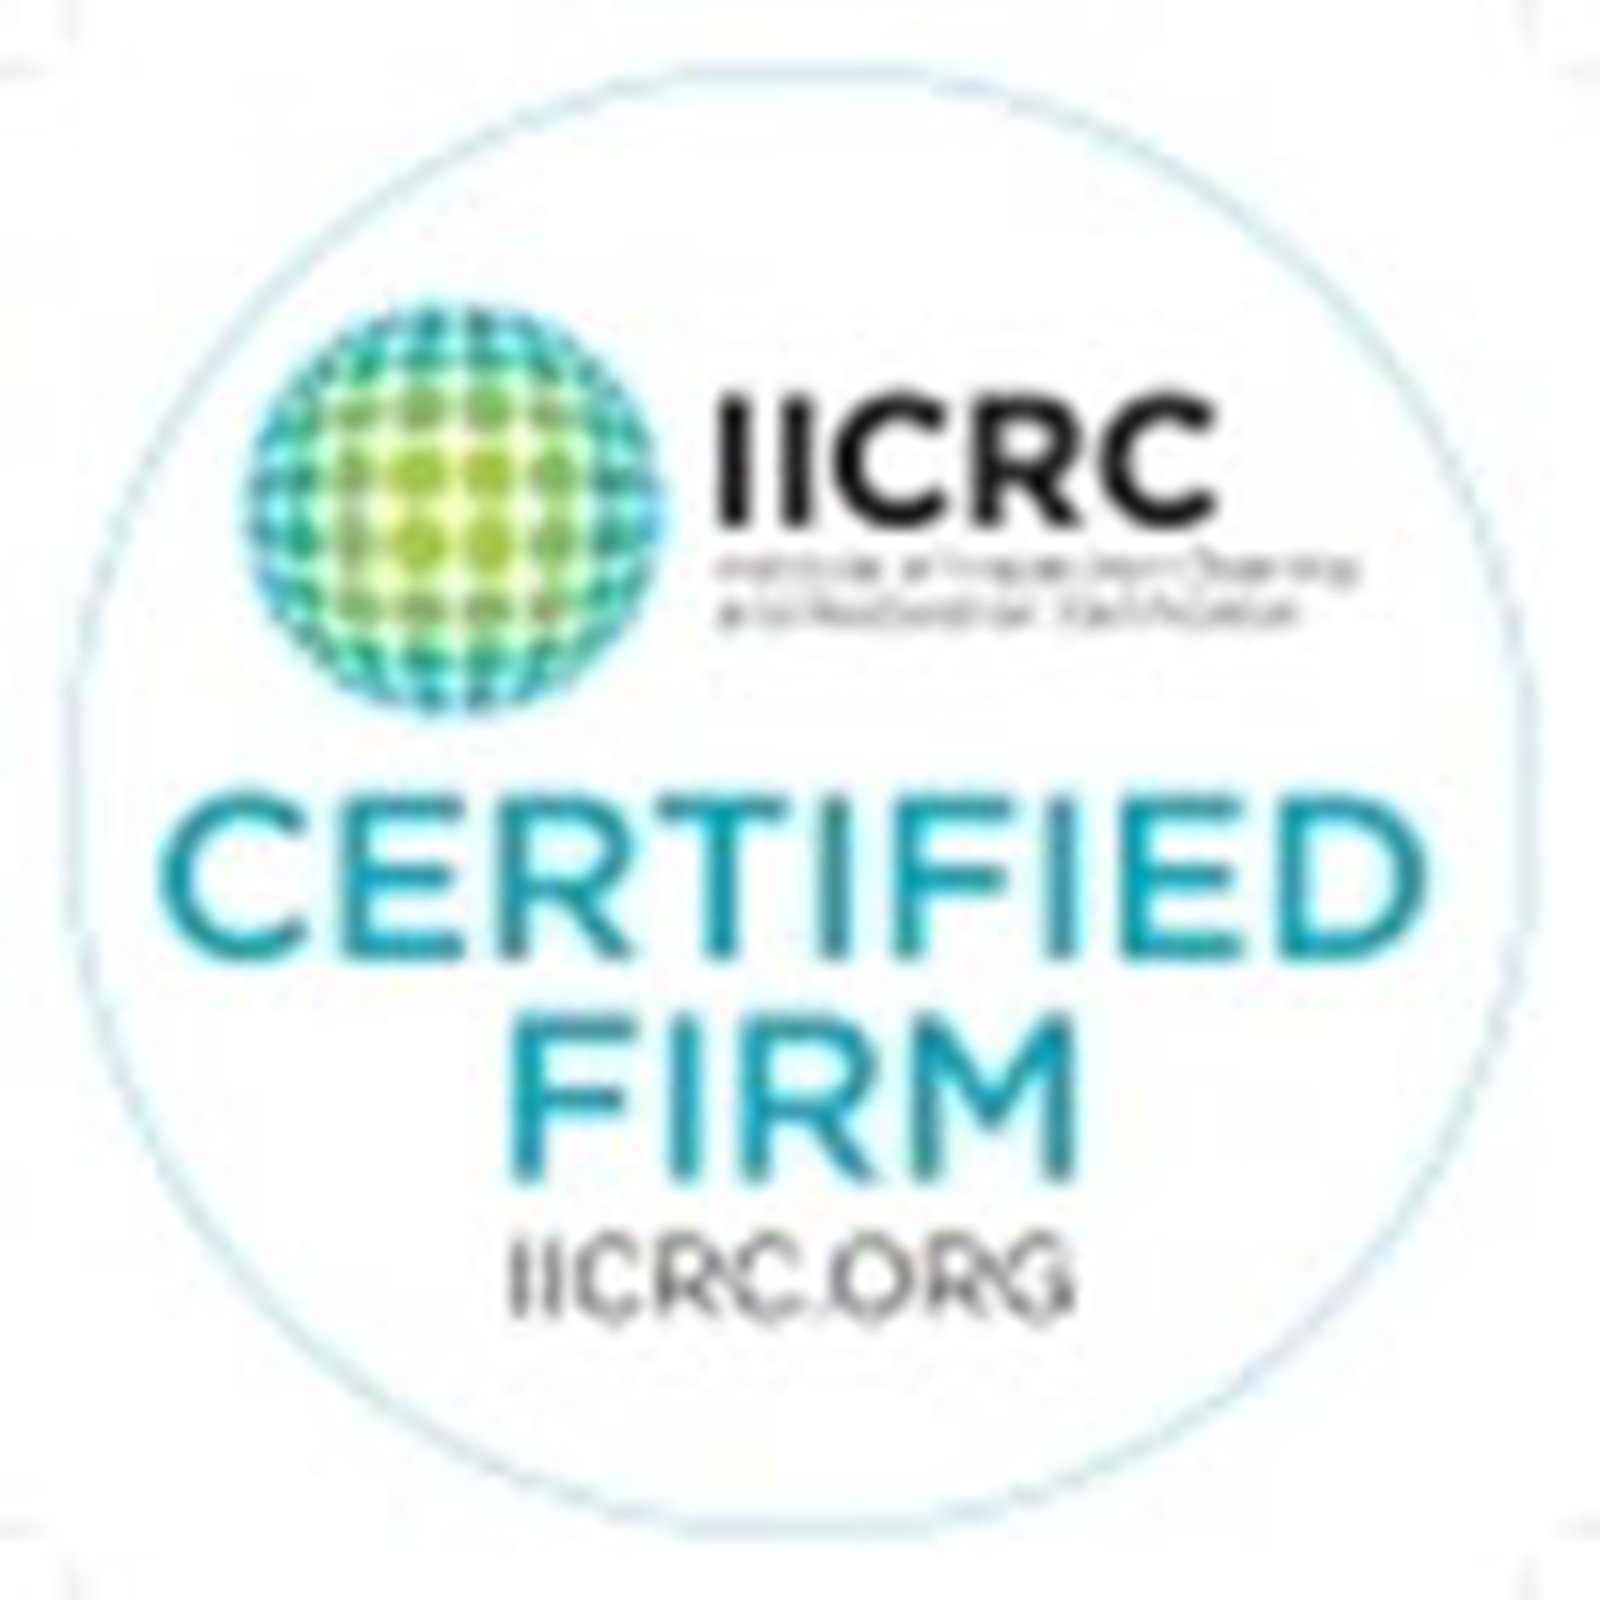 IICRC CERTIFIED FIRM # 57929315 